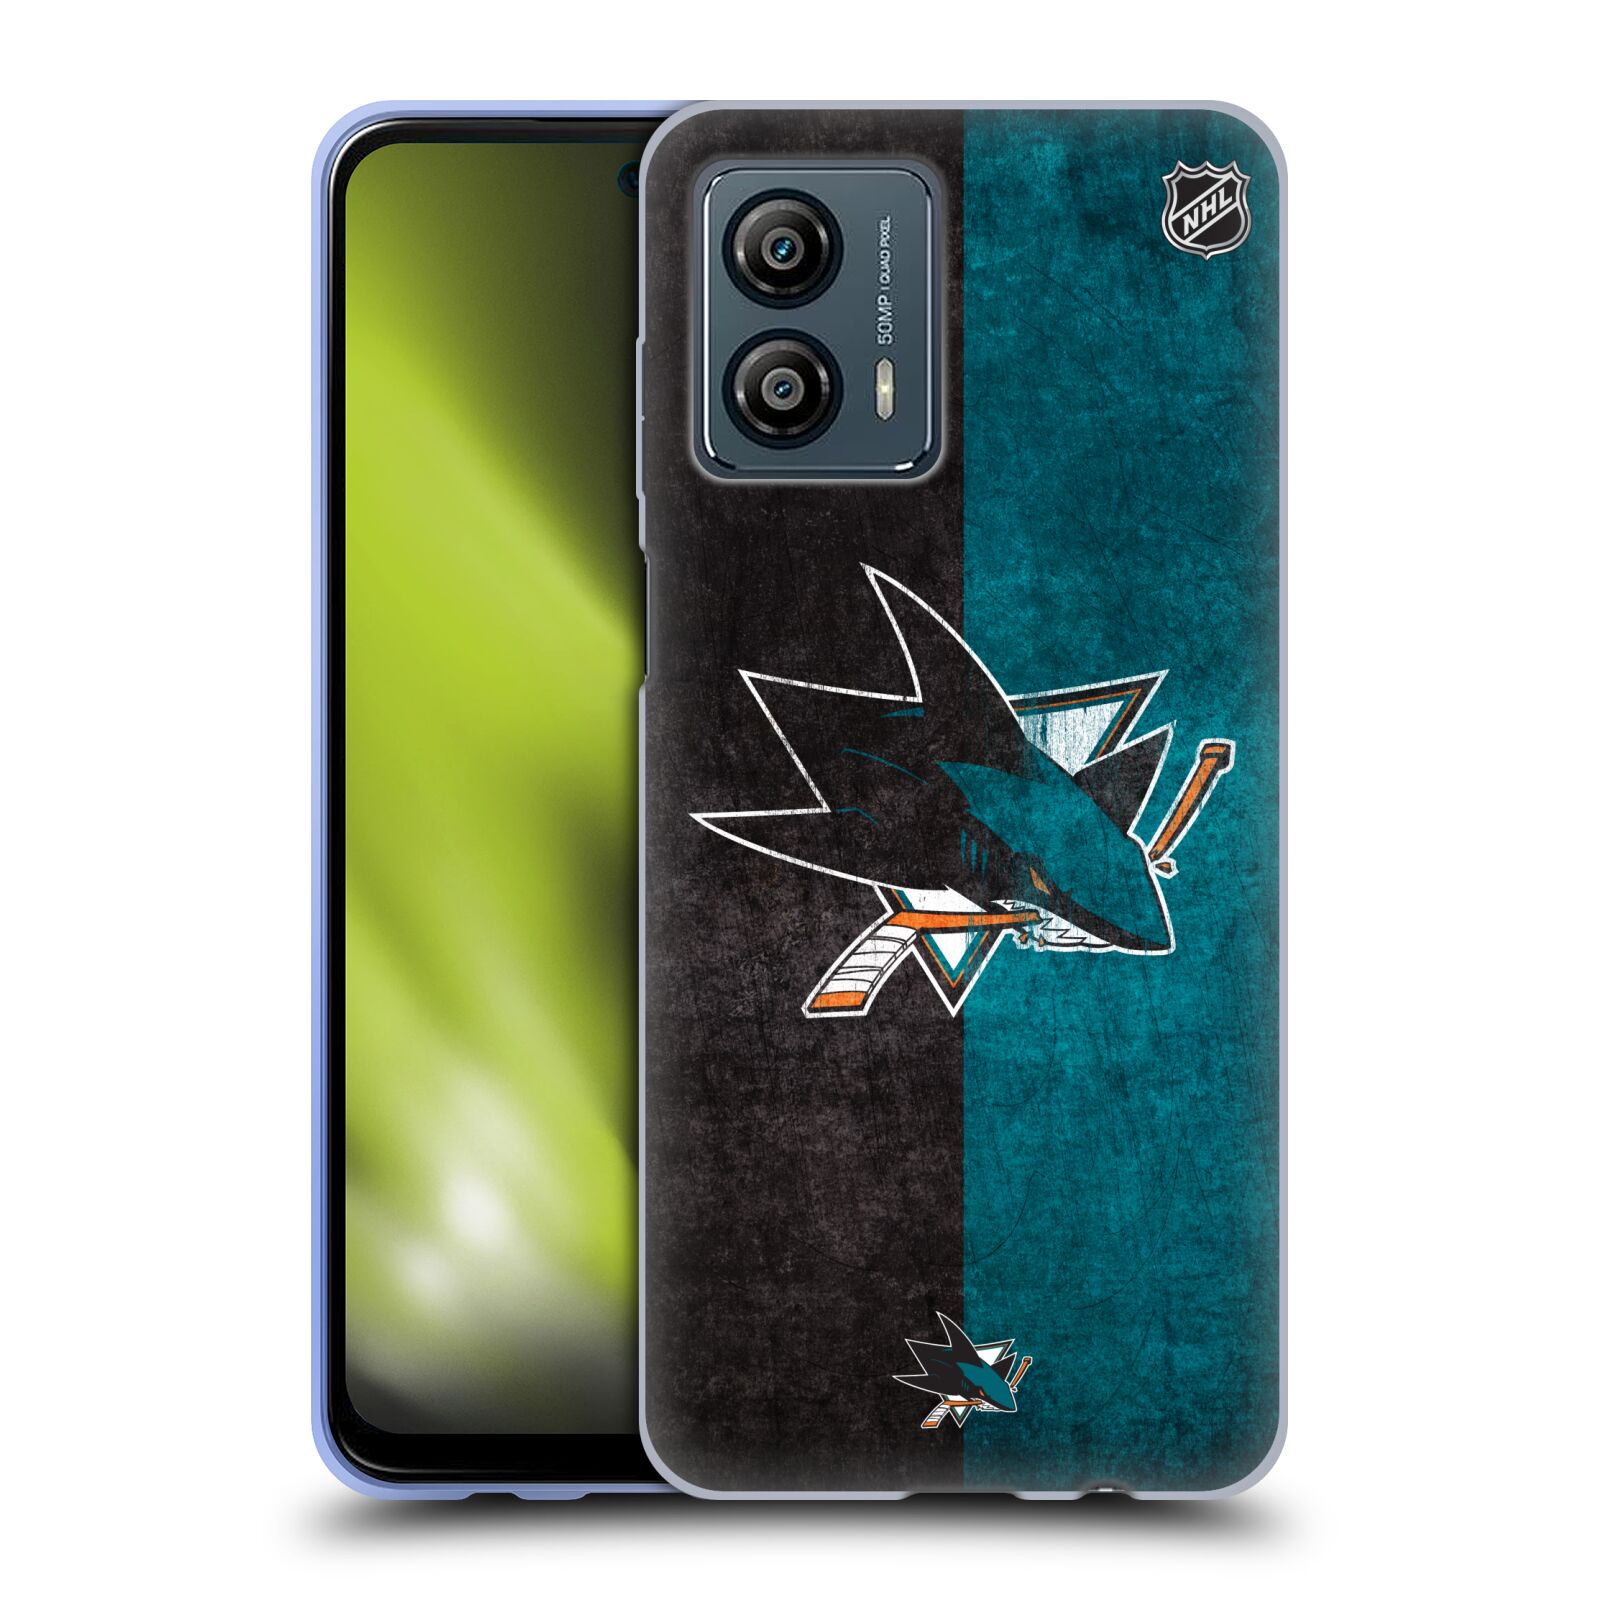 Silikonové pouzdro na mobil Motorola Moto G53 5G - NHL - Půlené logo San Jose Sharks (Silikonový kryt, obal, pouzdro na mobilní telefon Motorola Moto G53 5G s licencovaným motivem NHL - Půlené logo San Jose Sharks)